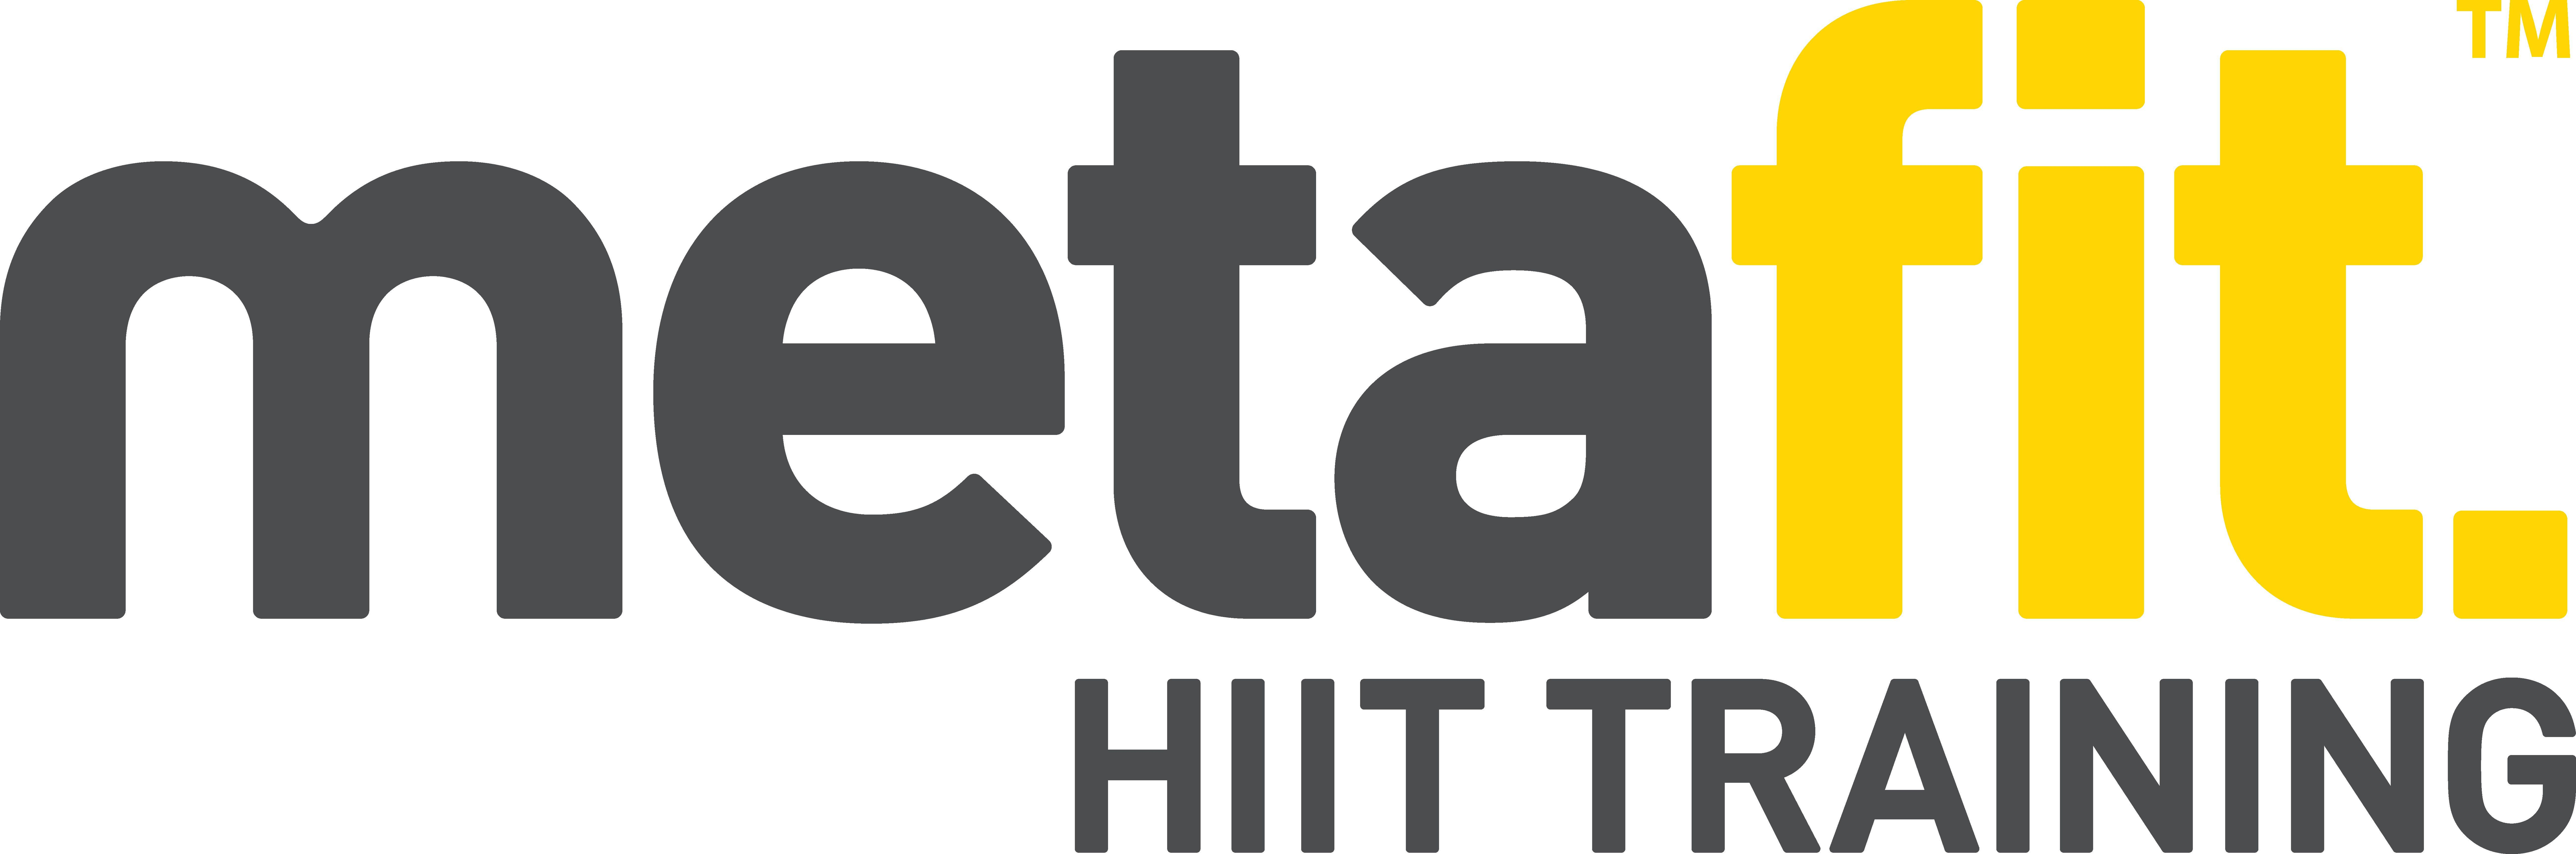 HIIT Logo - Metafit-Logo-HIIT - Fitness Connection